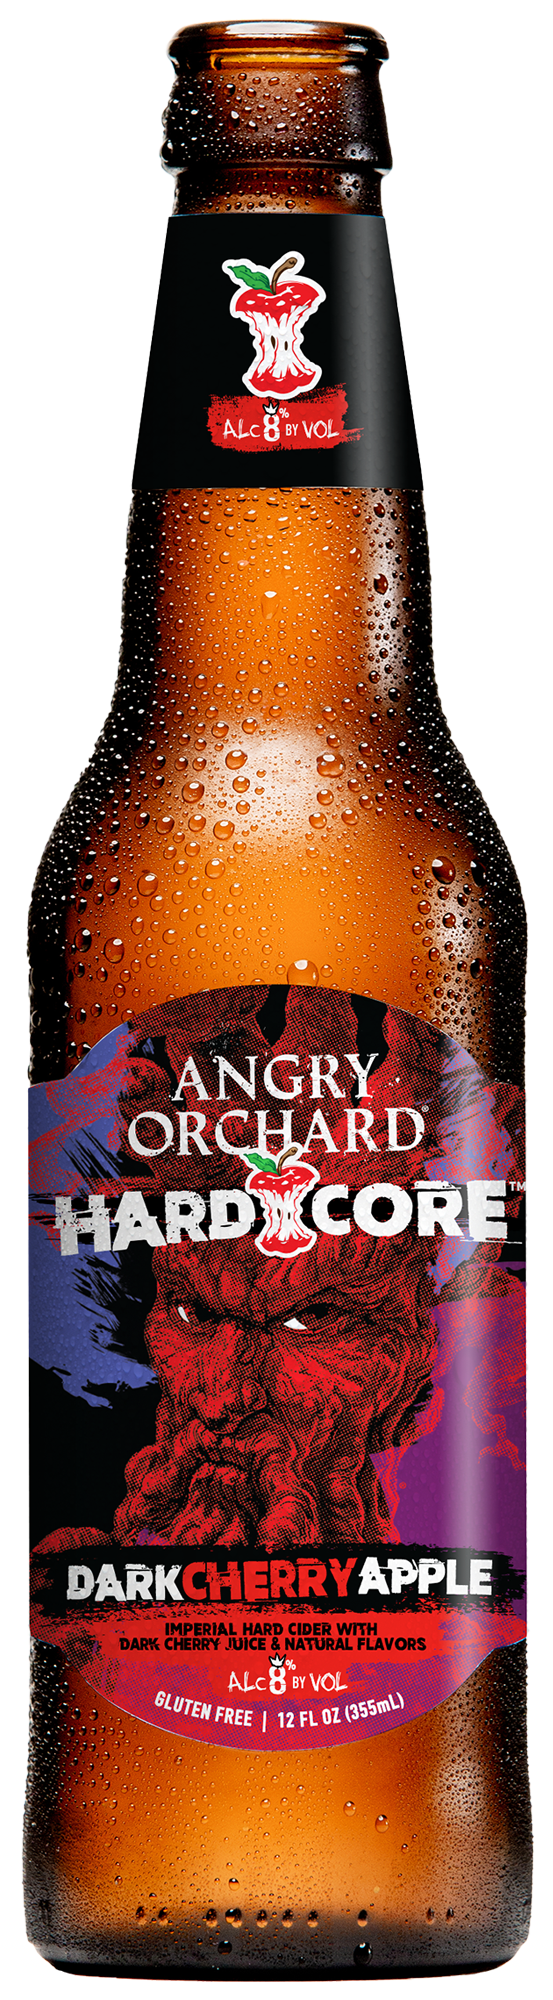 hardcore dark cherry apple - 12oz bottle